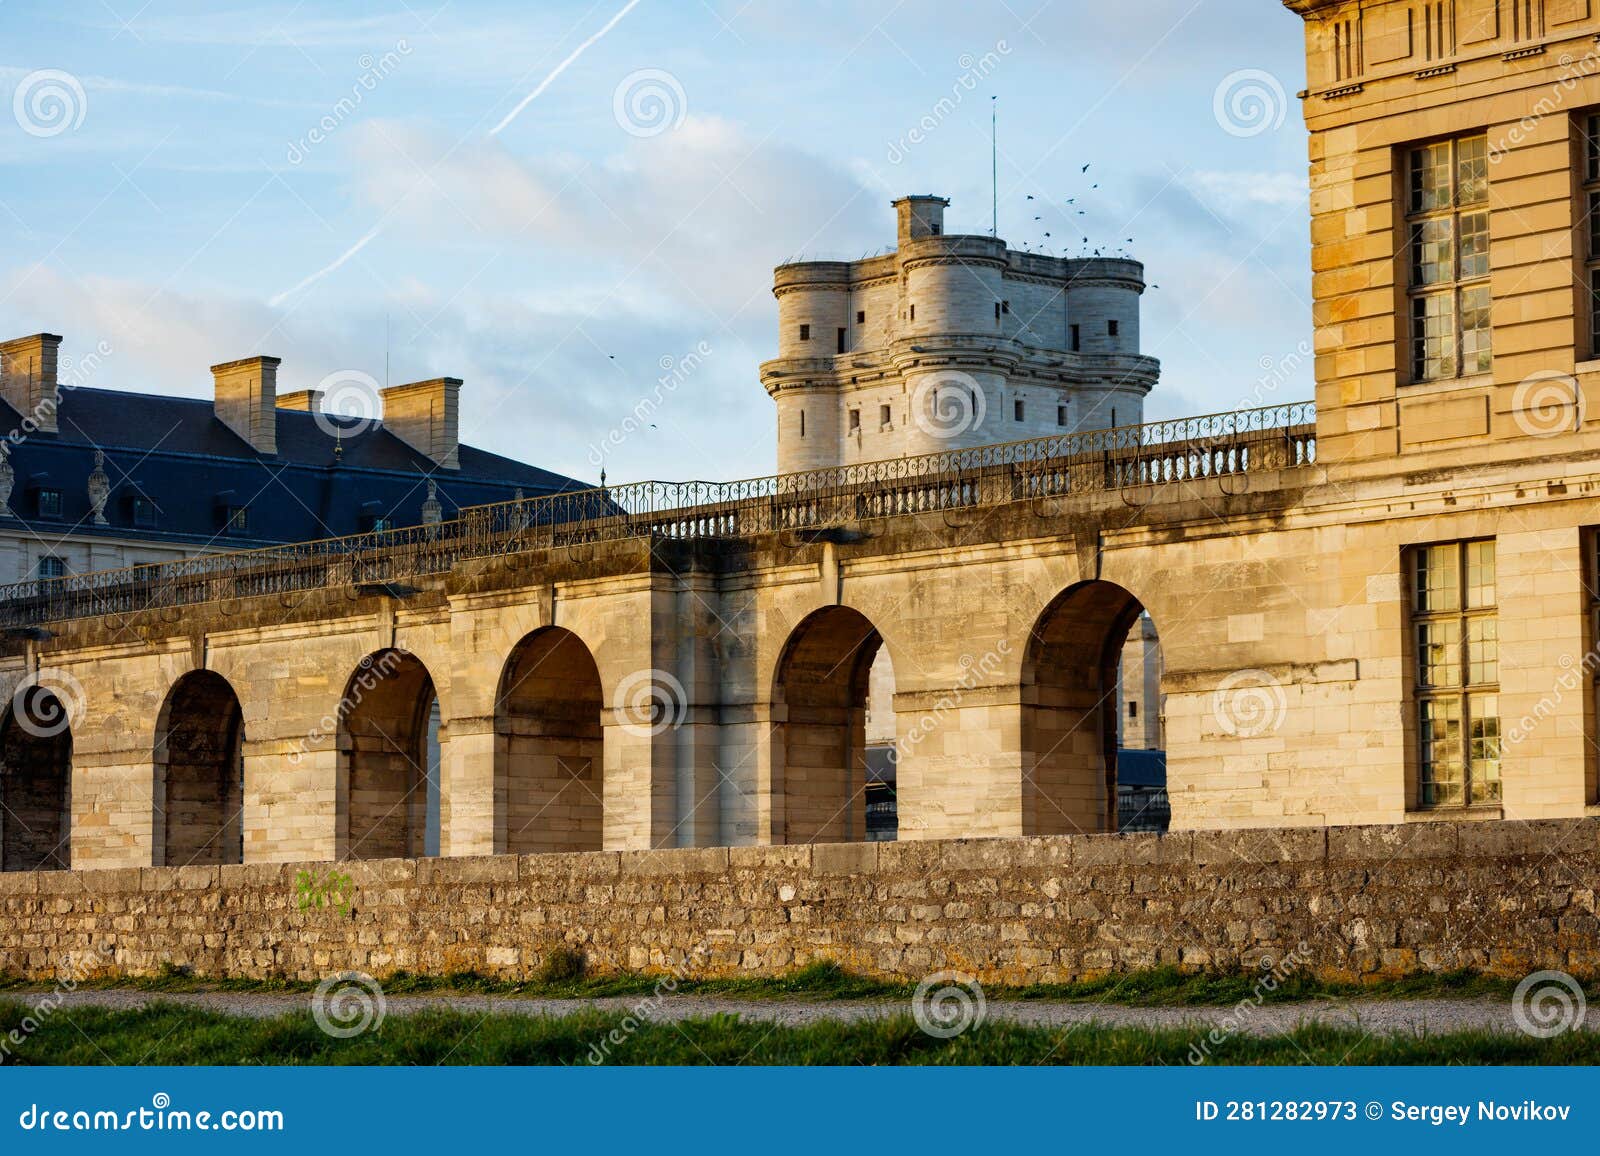 walls to donjon chateau de vincennes panorama near paris